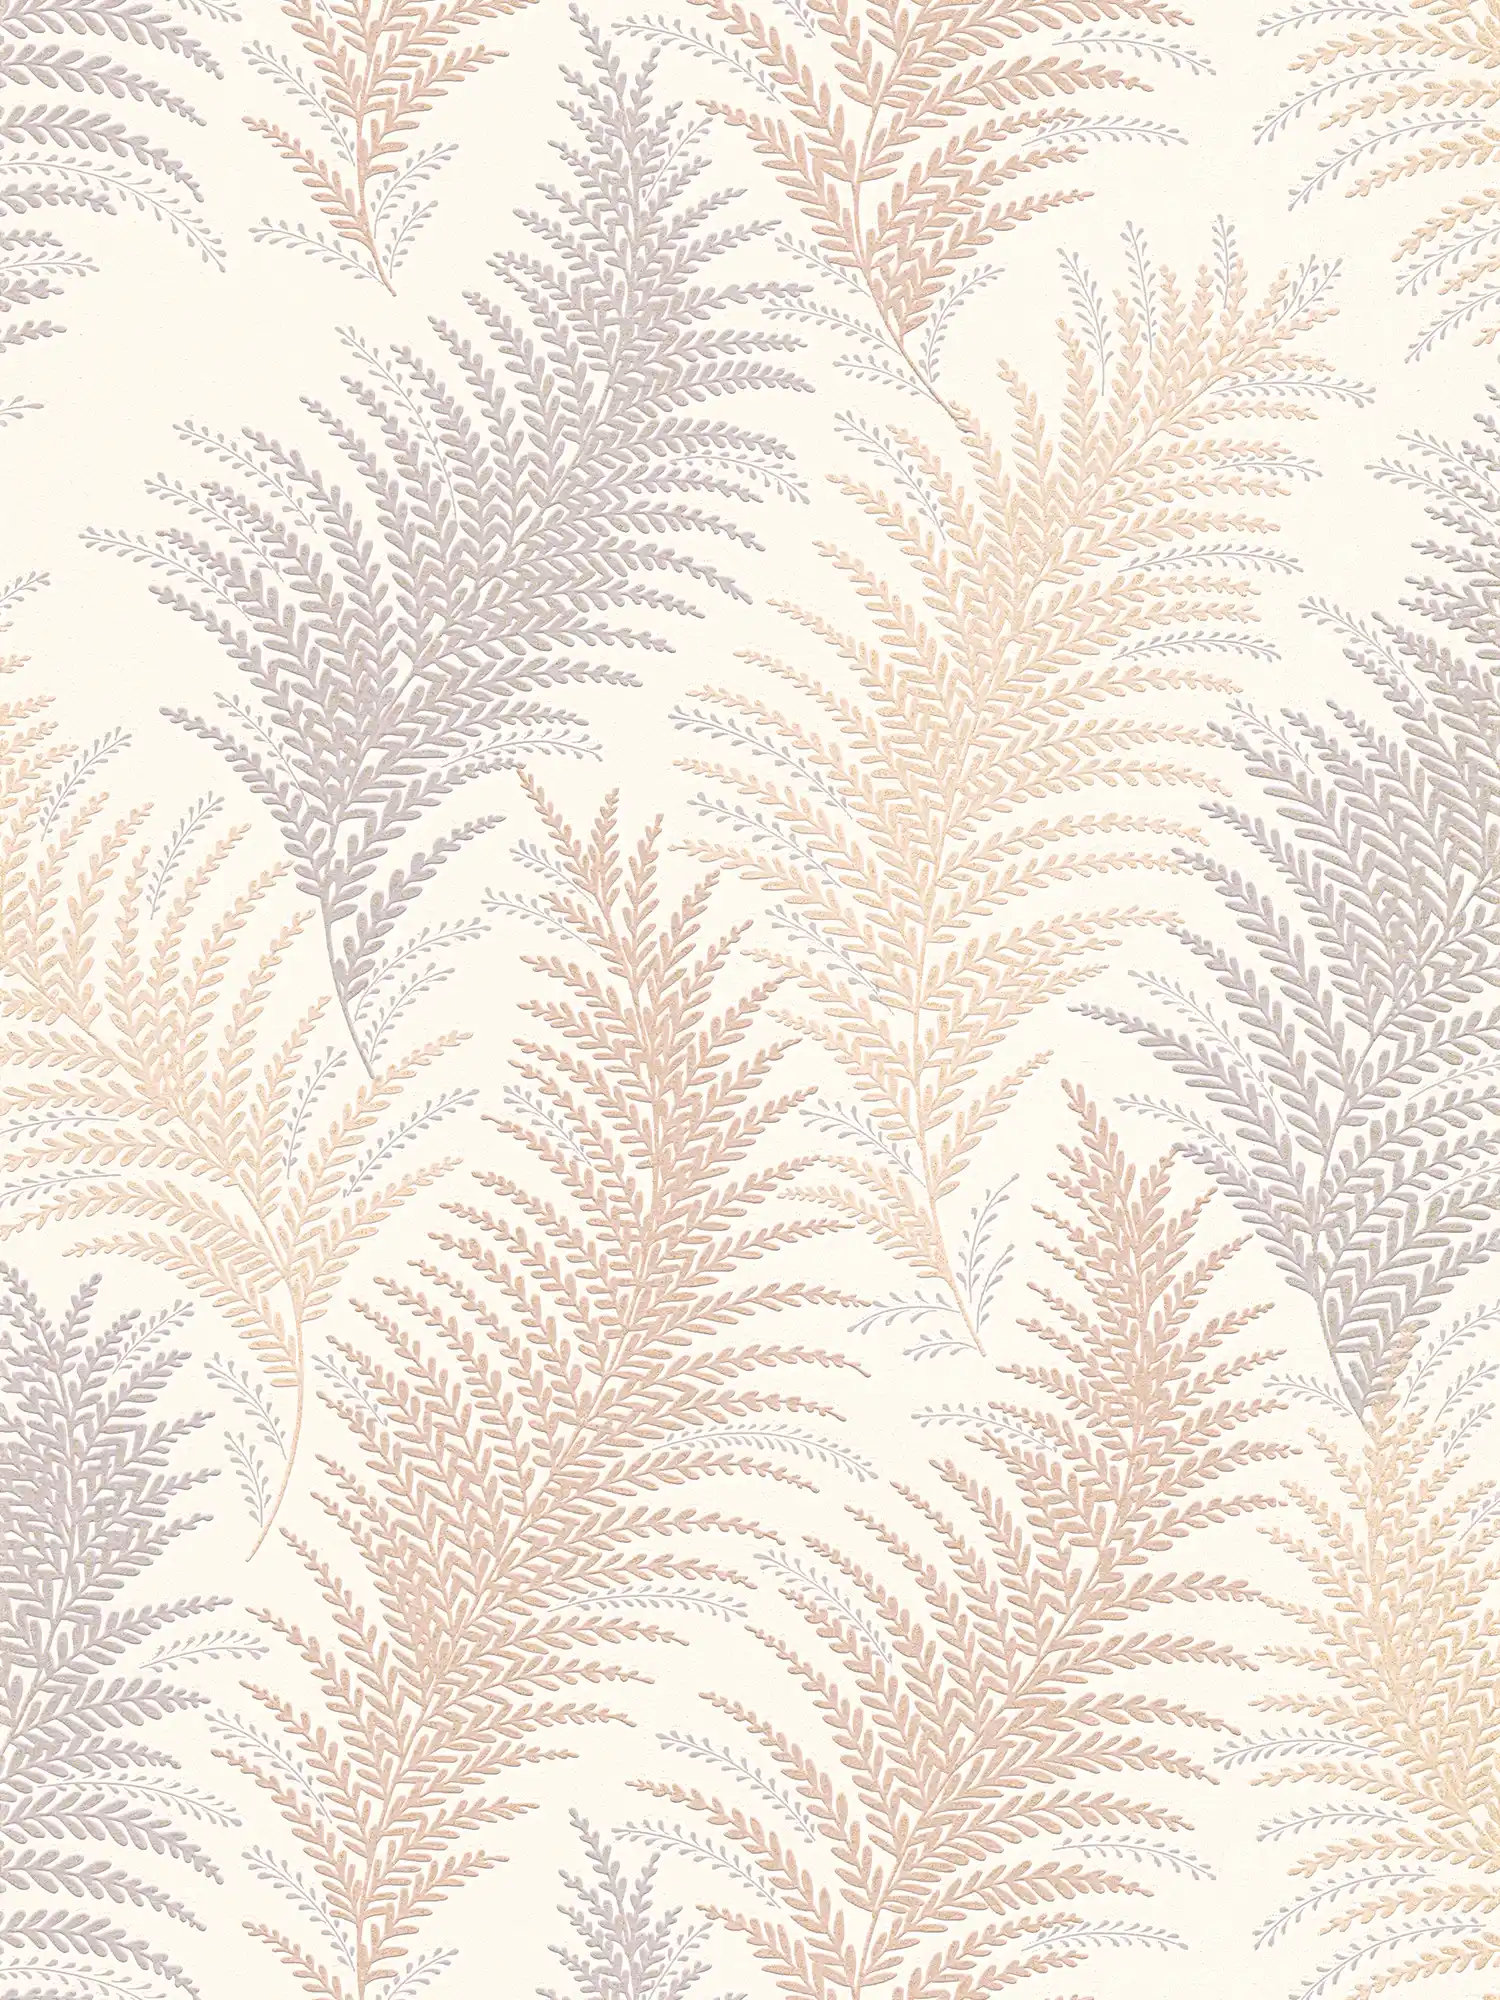 Plant pattern from ferns in metallic colours - beige, grey, bronze, white
